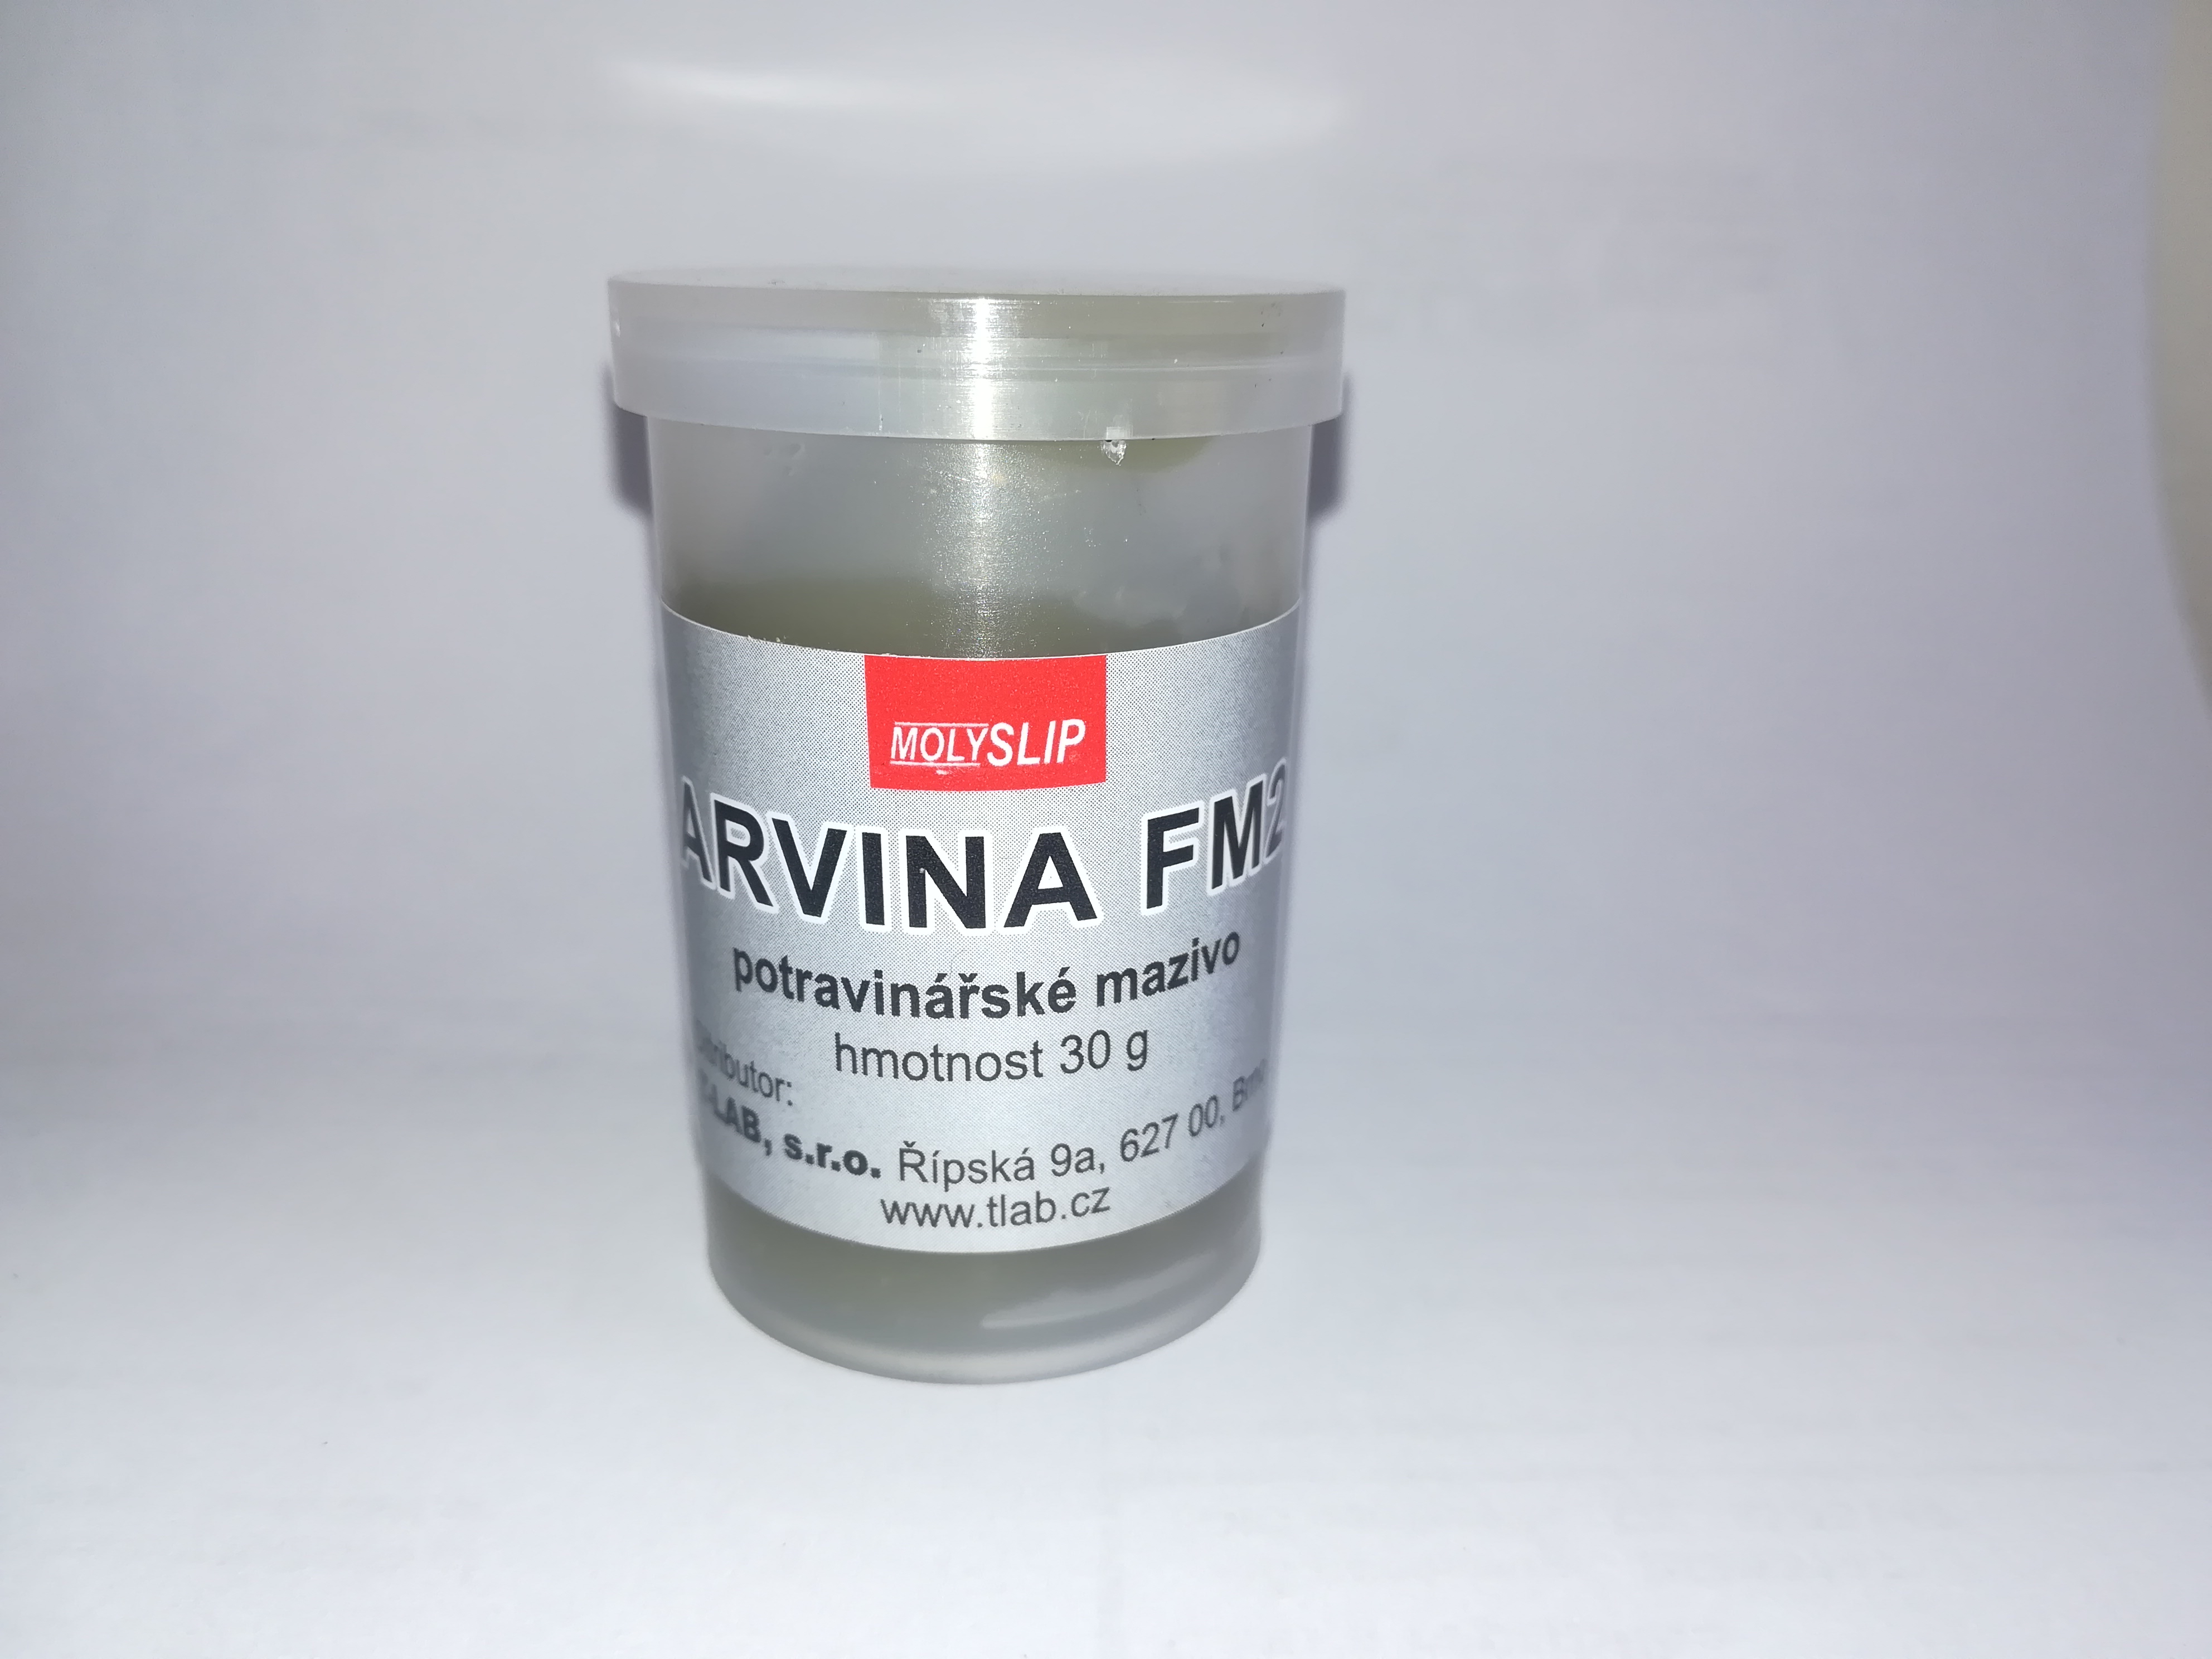 Molyslip Arvina FM2, 30g (potravinářské mazivo) Starý název:FMG